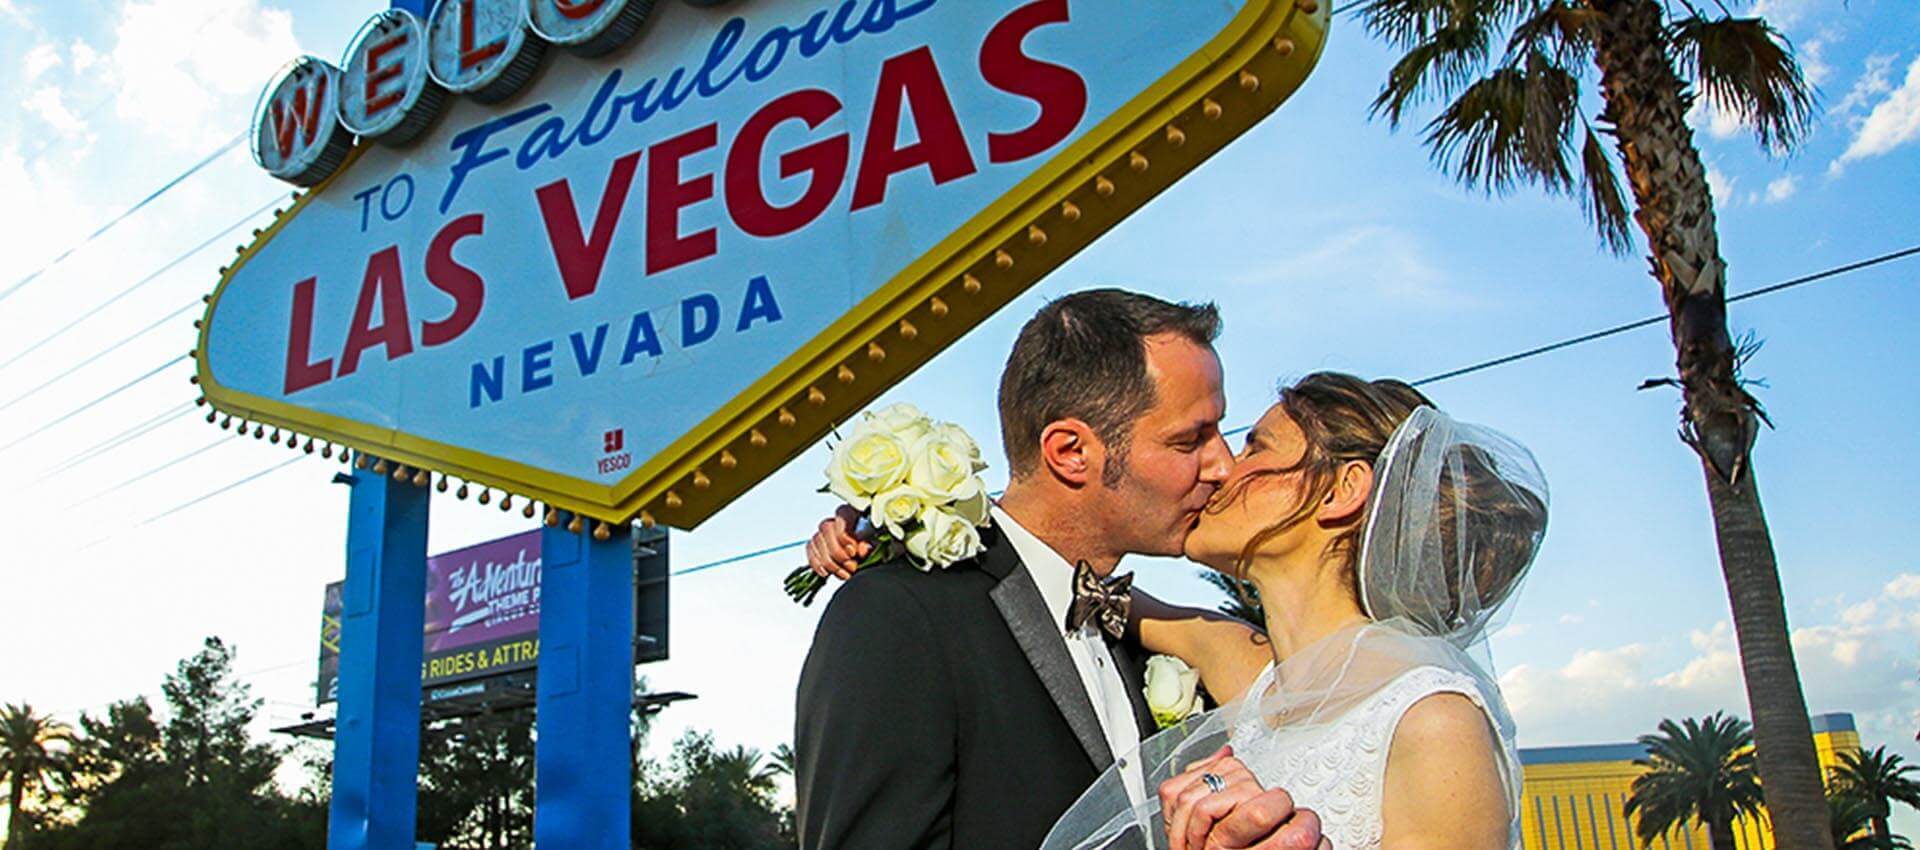 Nevada Wedding